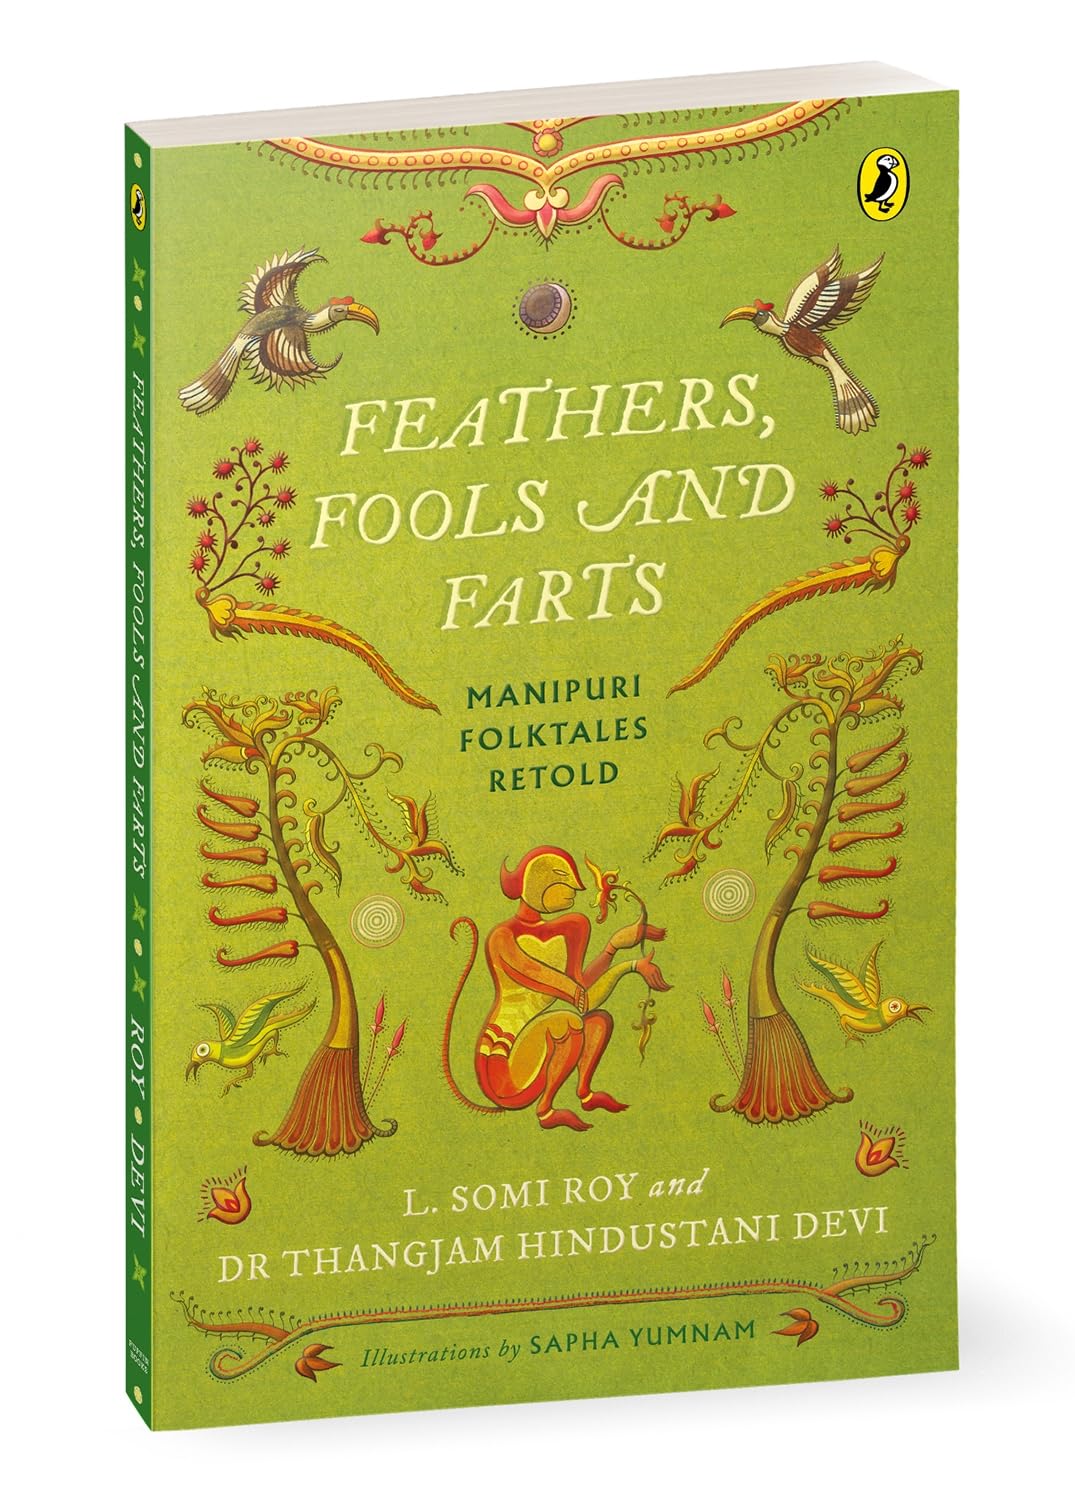 Feathers, Fools and Farts: Manipuri Folktales Retold